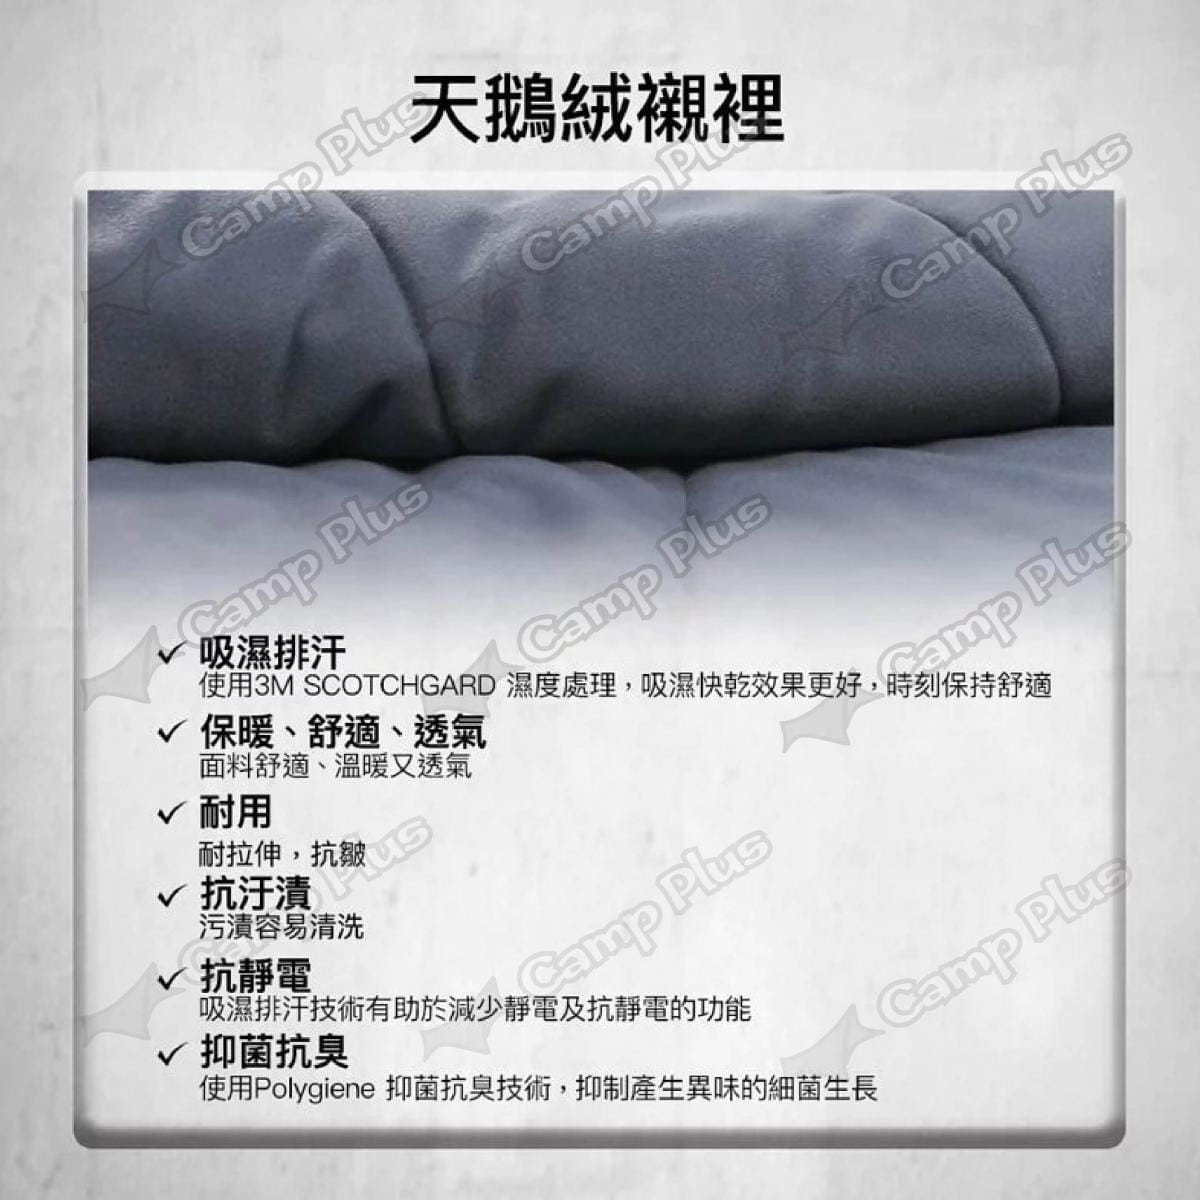 【LITUME】意都美 FENC® Insulate 科技棉睡袋 C061  悠遊戶外 3